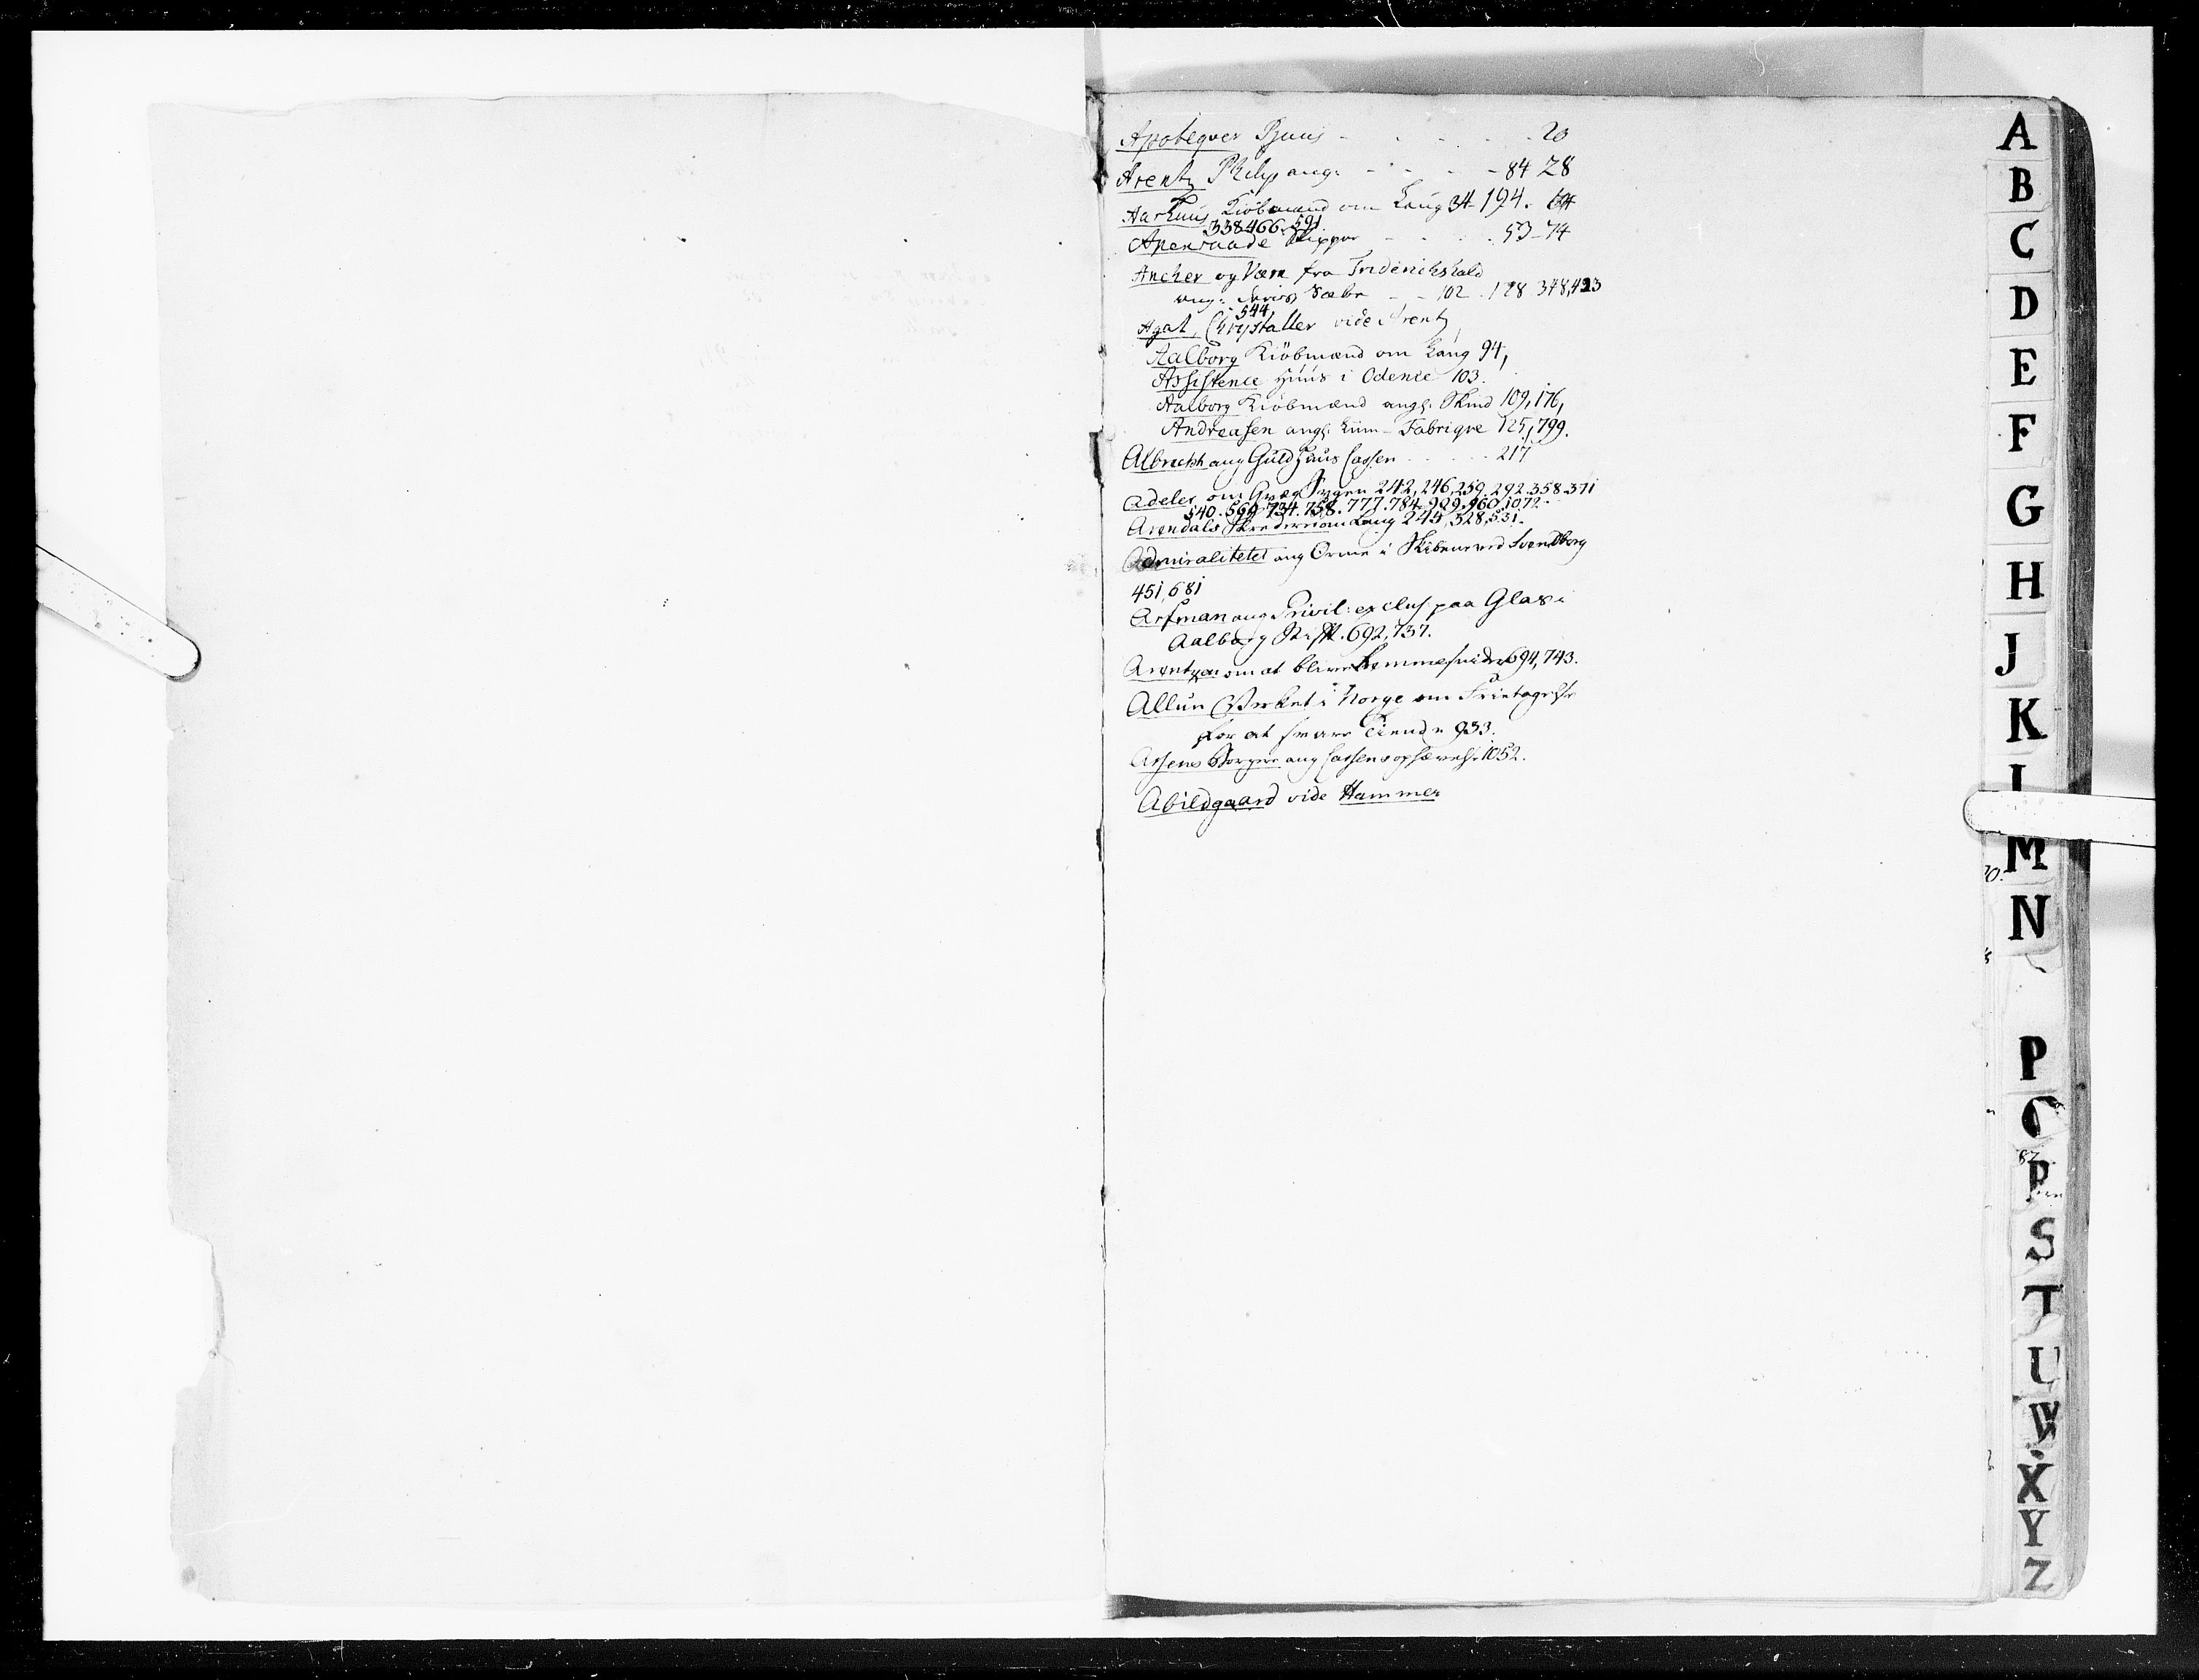 Kommercekollegiet, Dansk-Norske Sekretariat, DRA/A-0001/11/53: Journal nr. 5, 1750-1753